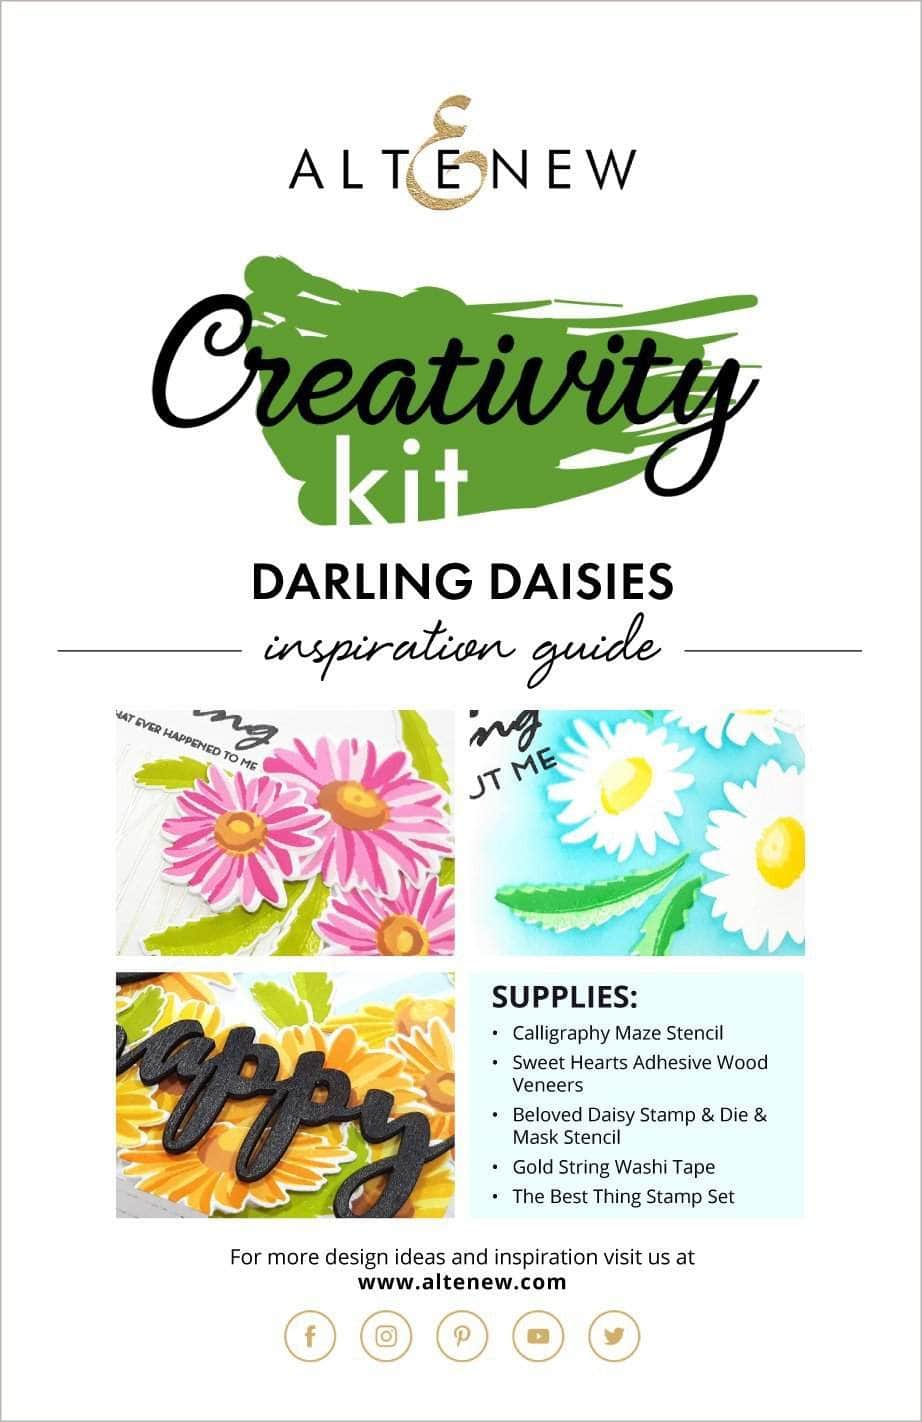 Printed Media Darling Daisies Creativity Kit Inspiration Guide